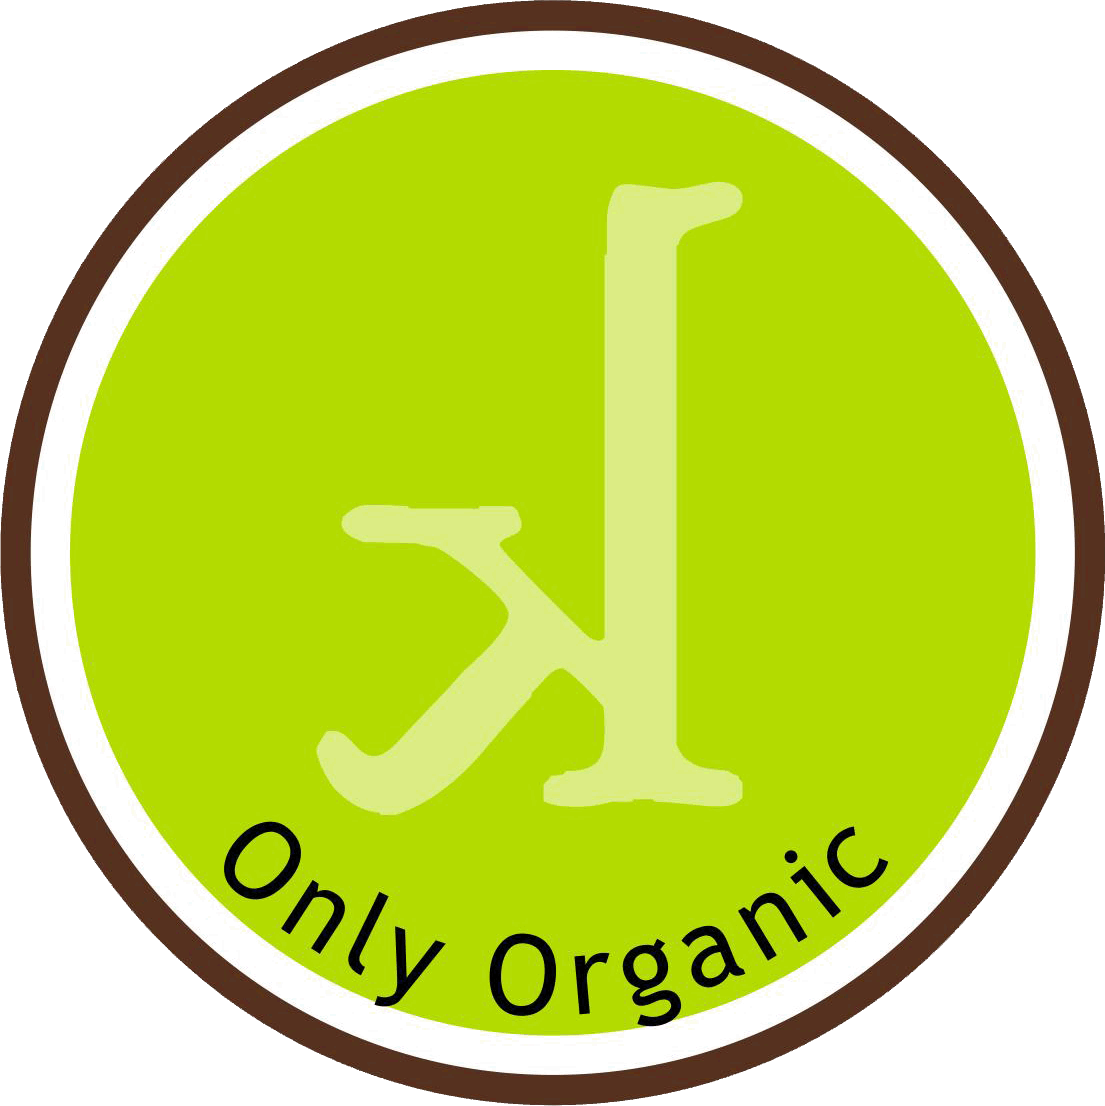 Only organic Ekotrebol